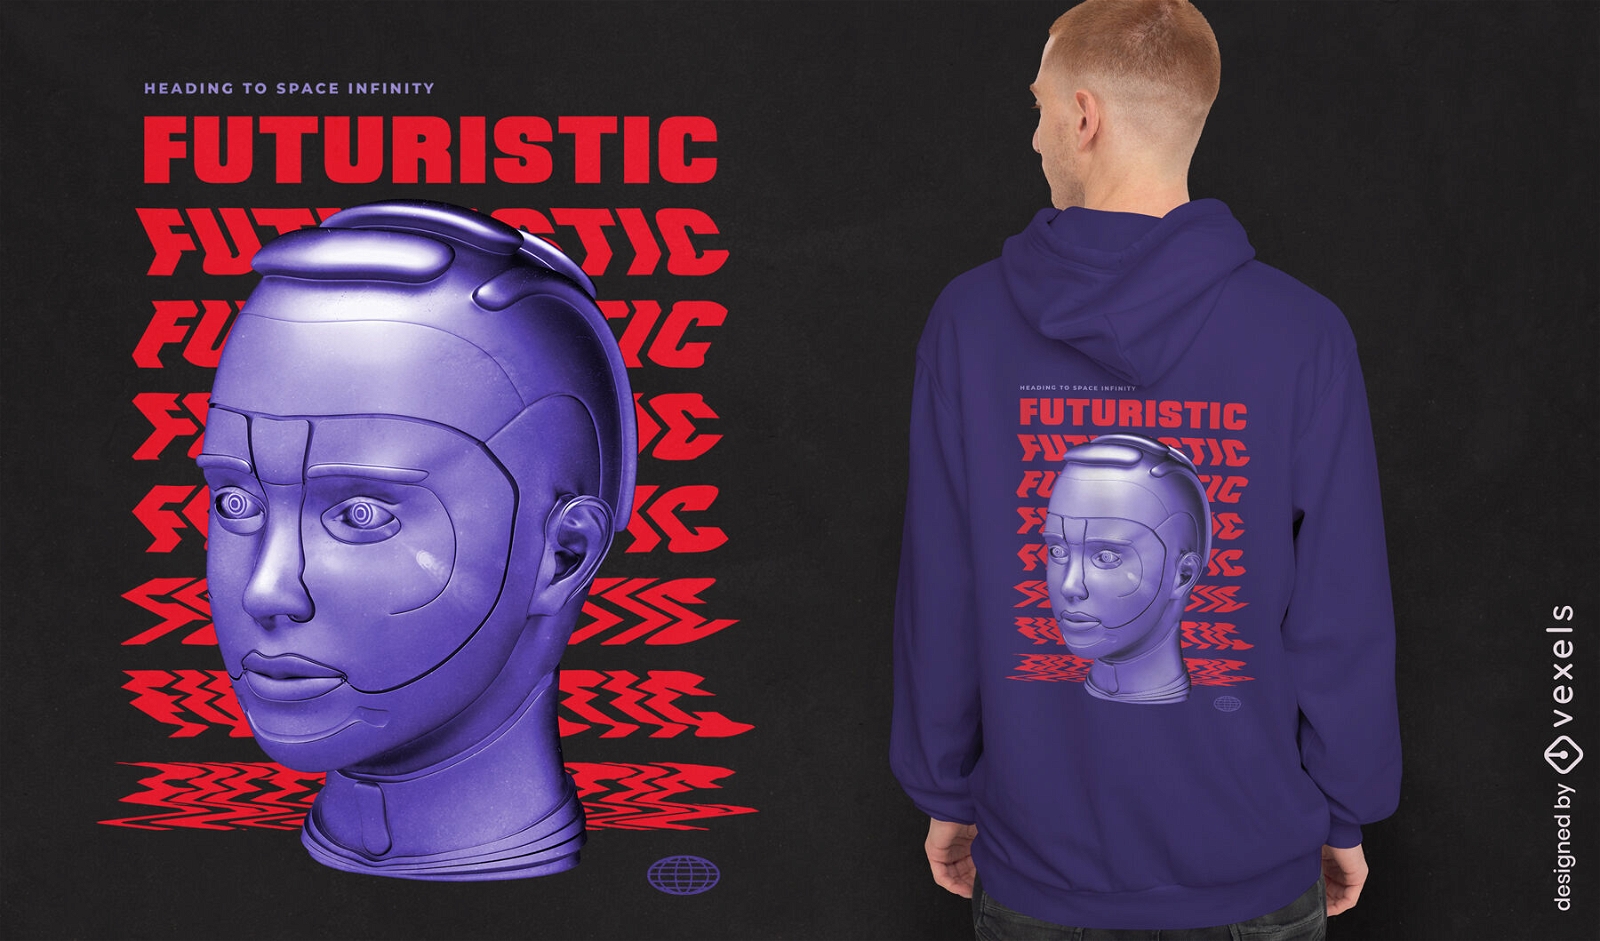 Futuristic robot head PSD t-shirt design